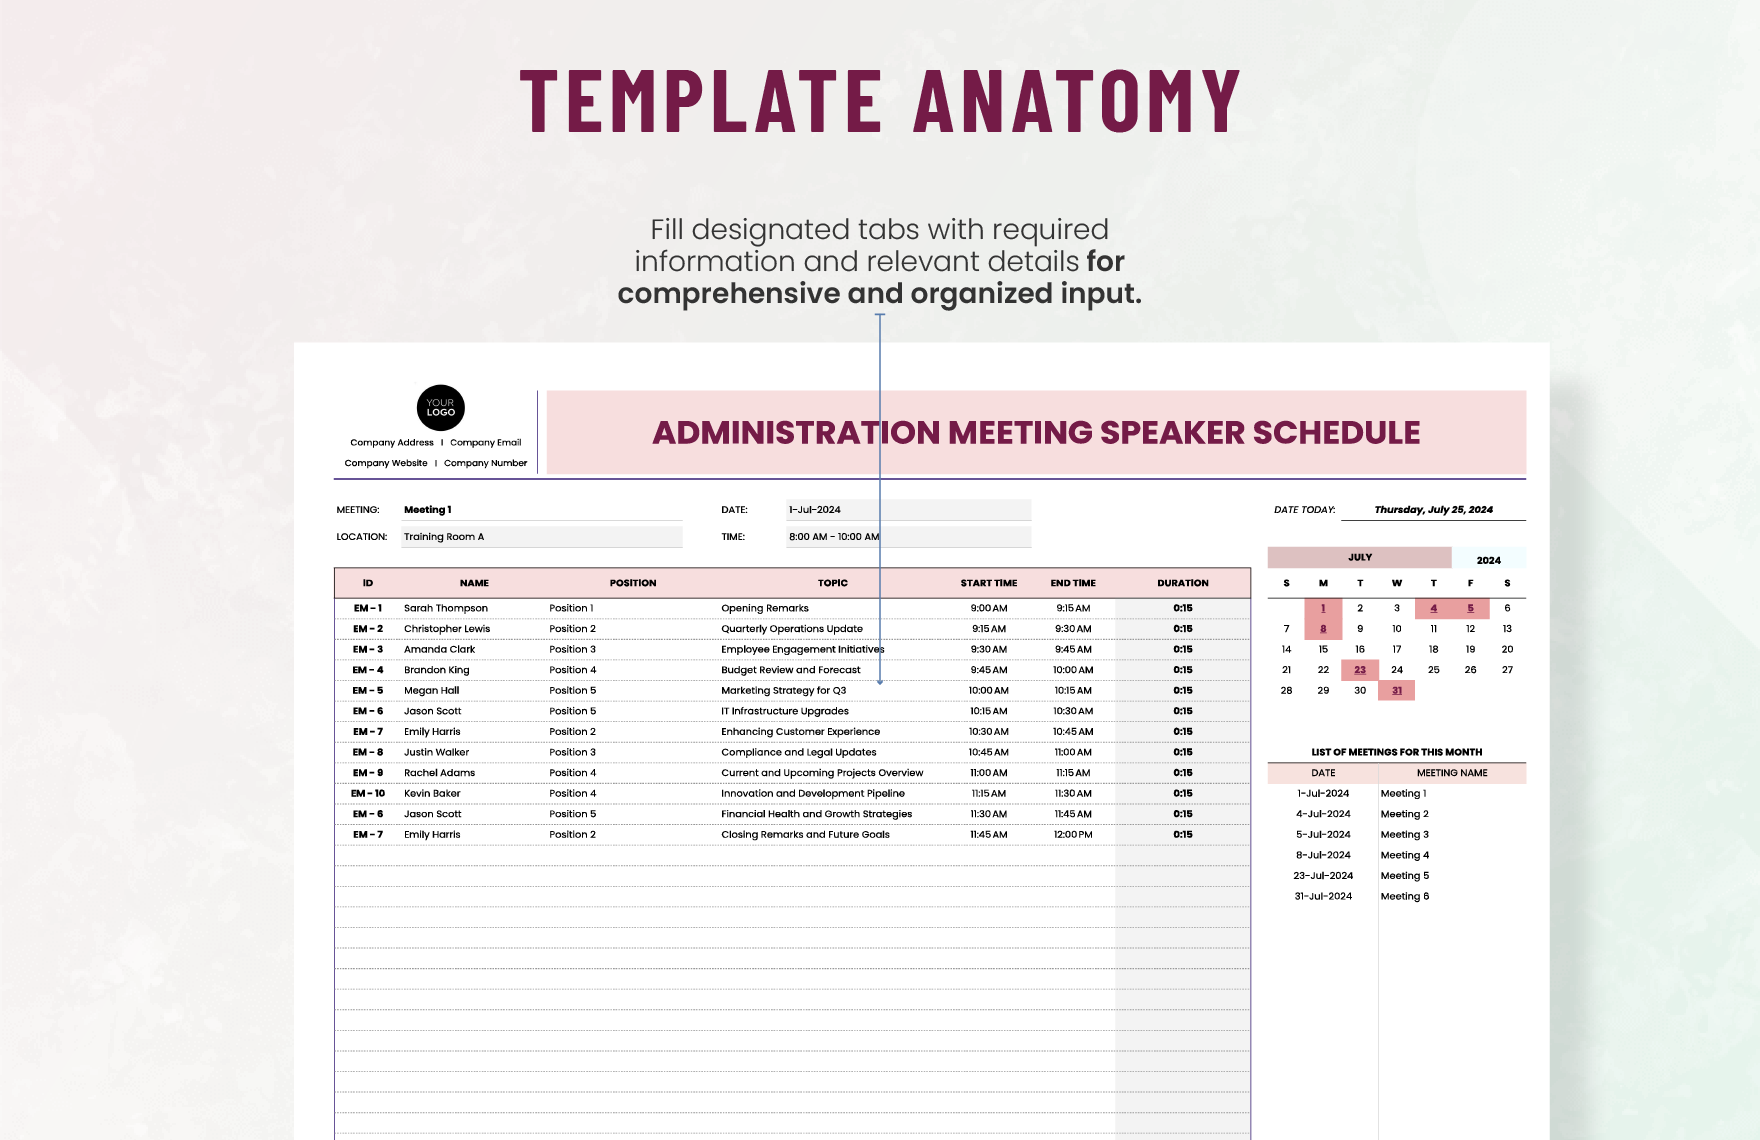 Administration Meeting Speaker Schedule Template